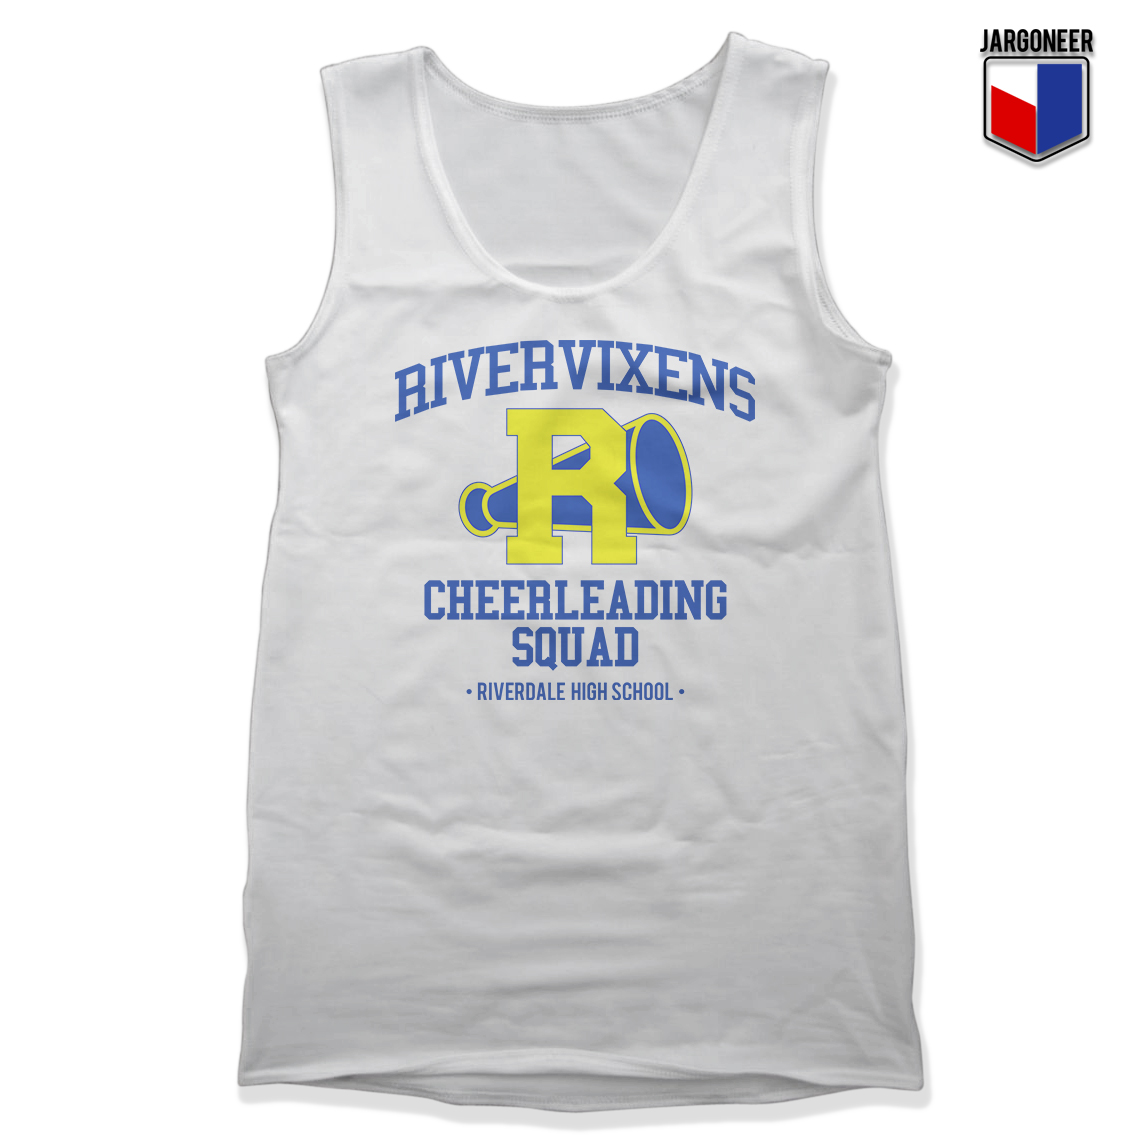 Riverdale Cheerleading Squad White Tank - Shop Unique Graphic Cool Shirt Designs